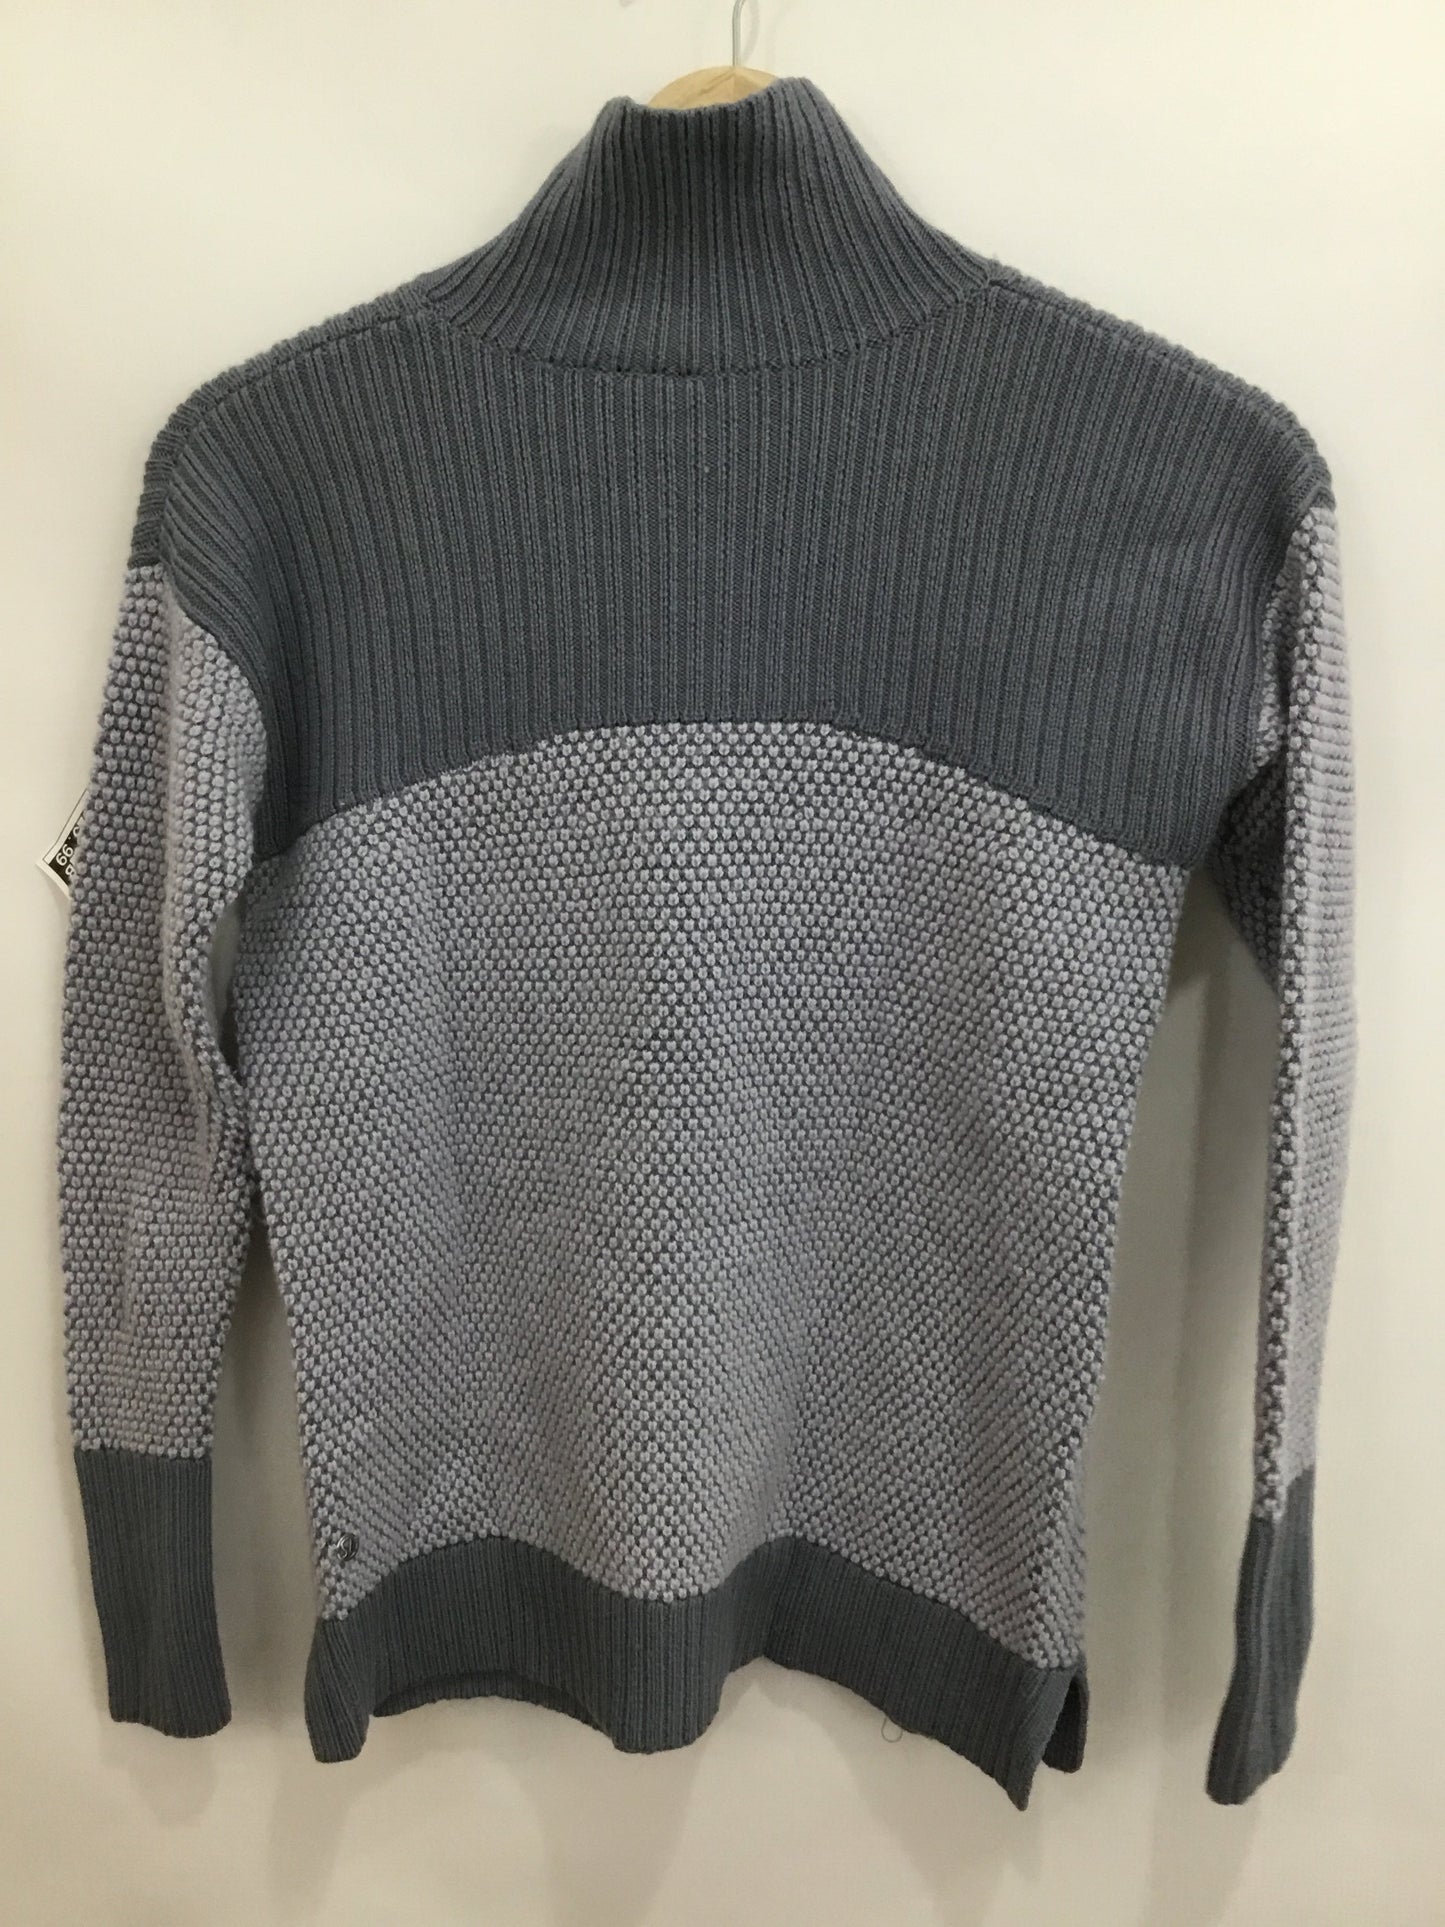 Sweater By Lululemon  Size: 4